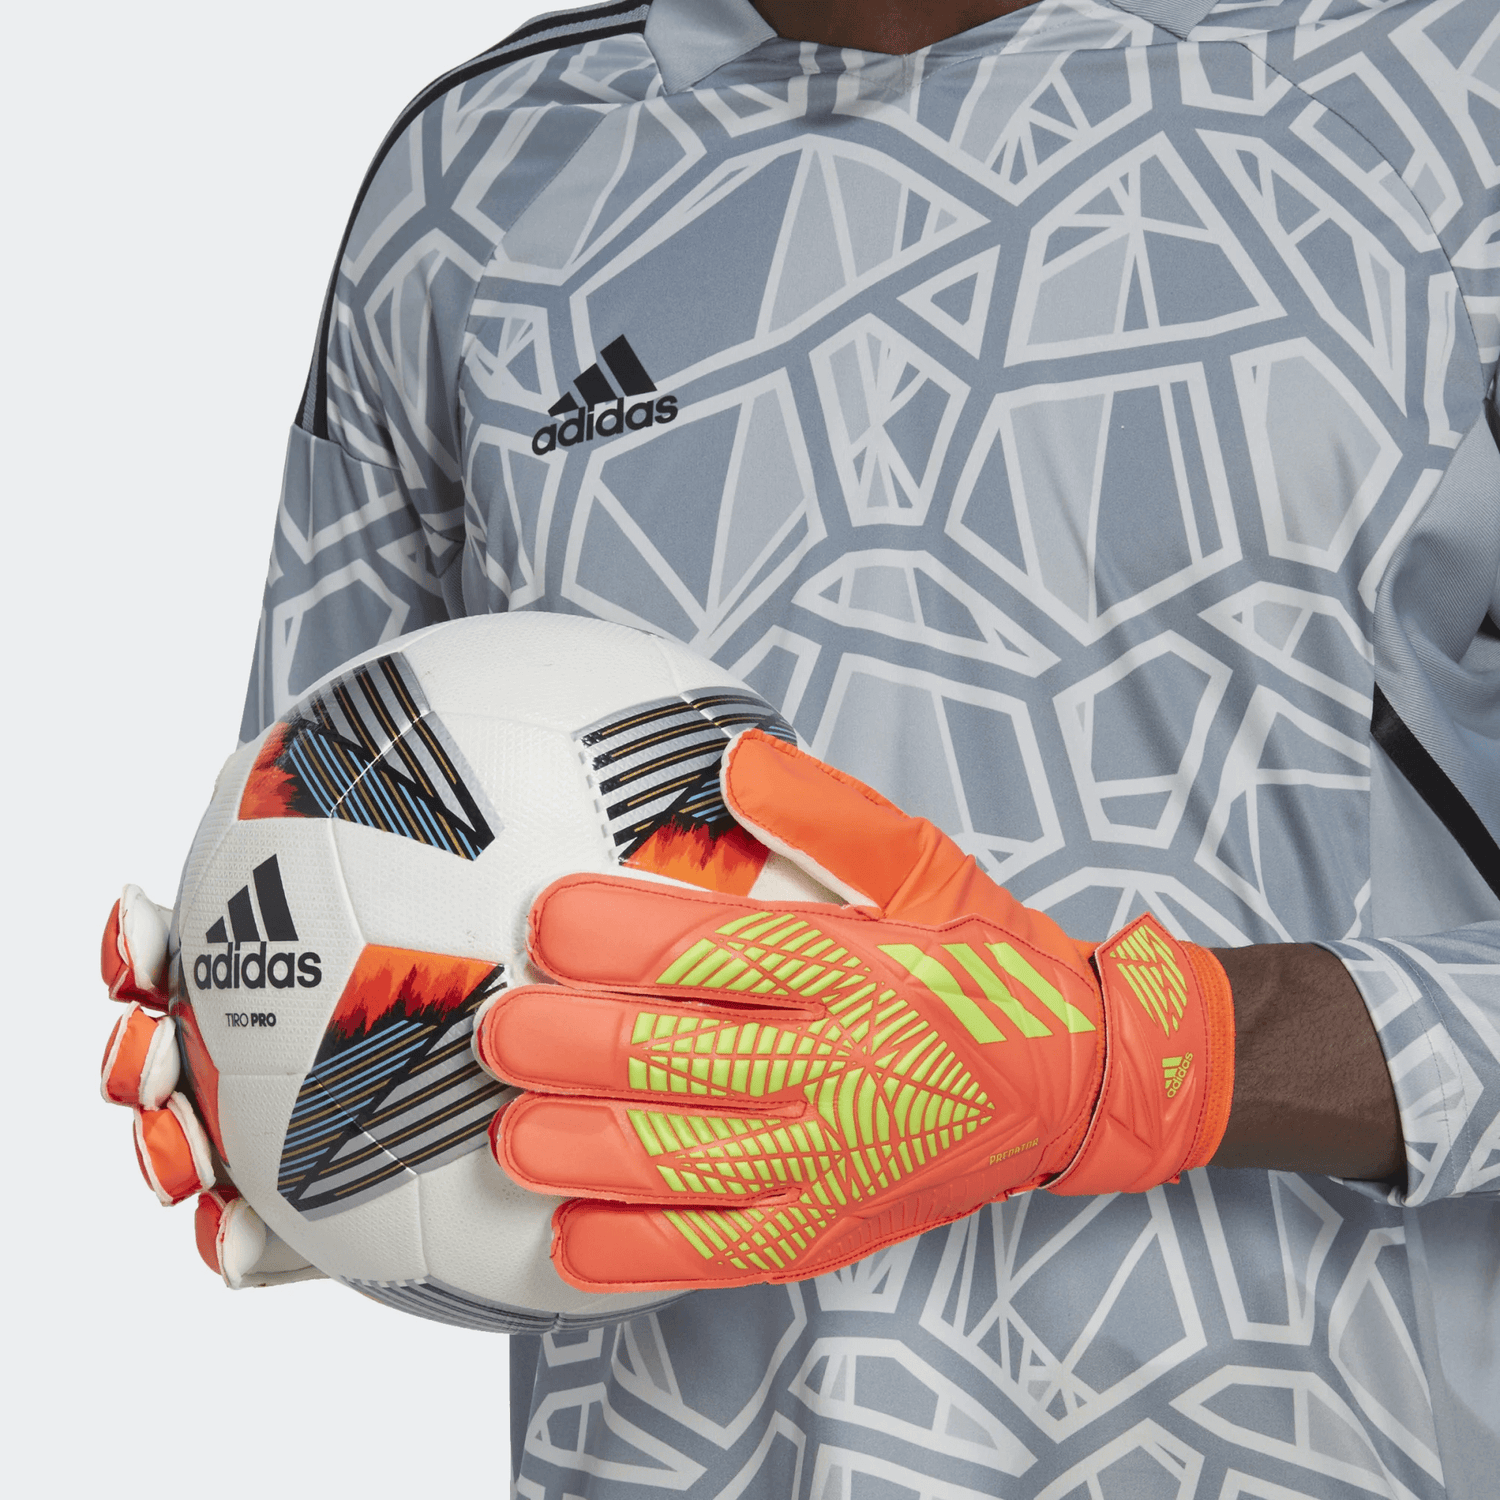 Adidas Predator Pro Fingersave Goalkeeper Gloves - Solar Red/Solar Green - 9